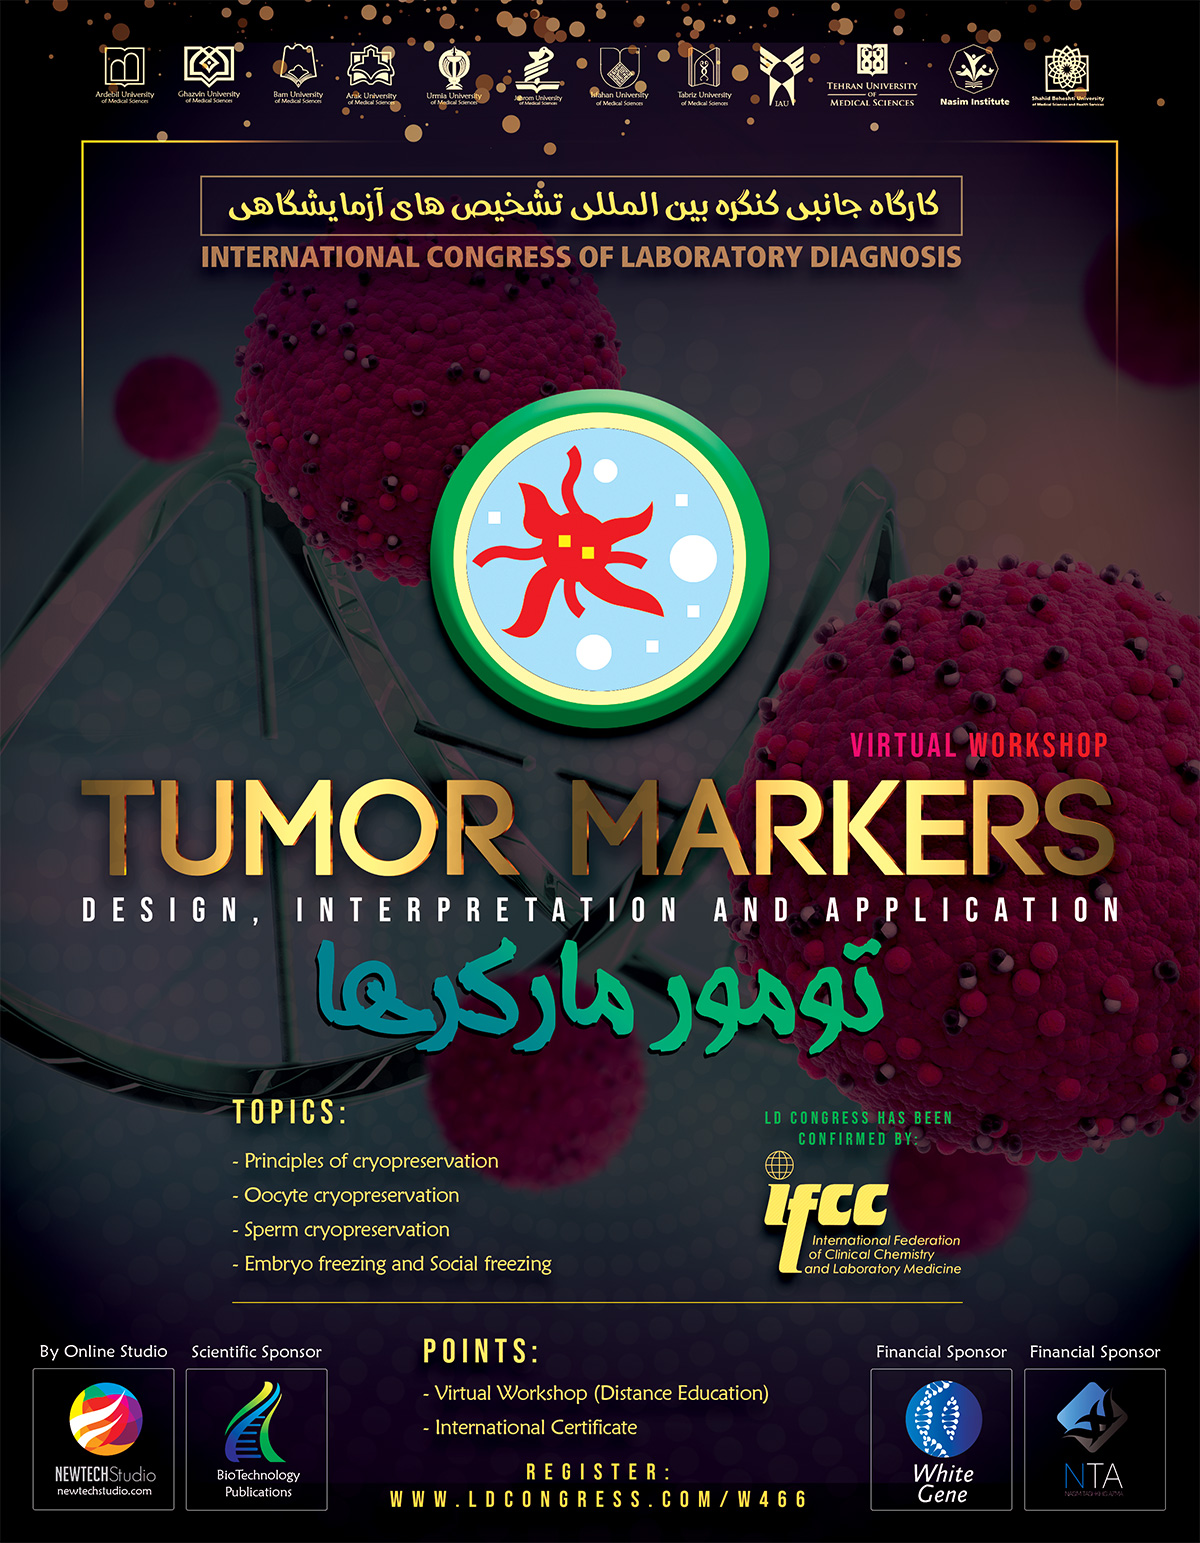 Tumor markers, design, interpretation and application